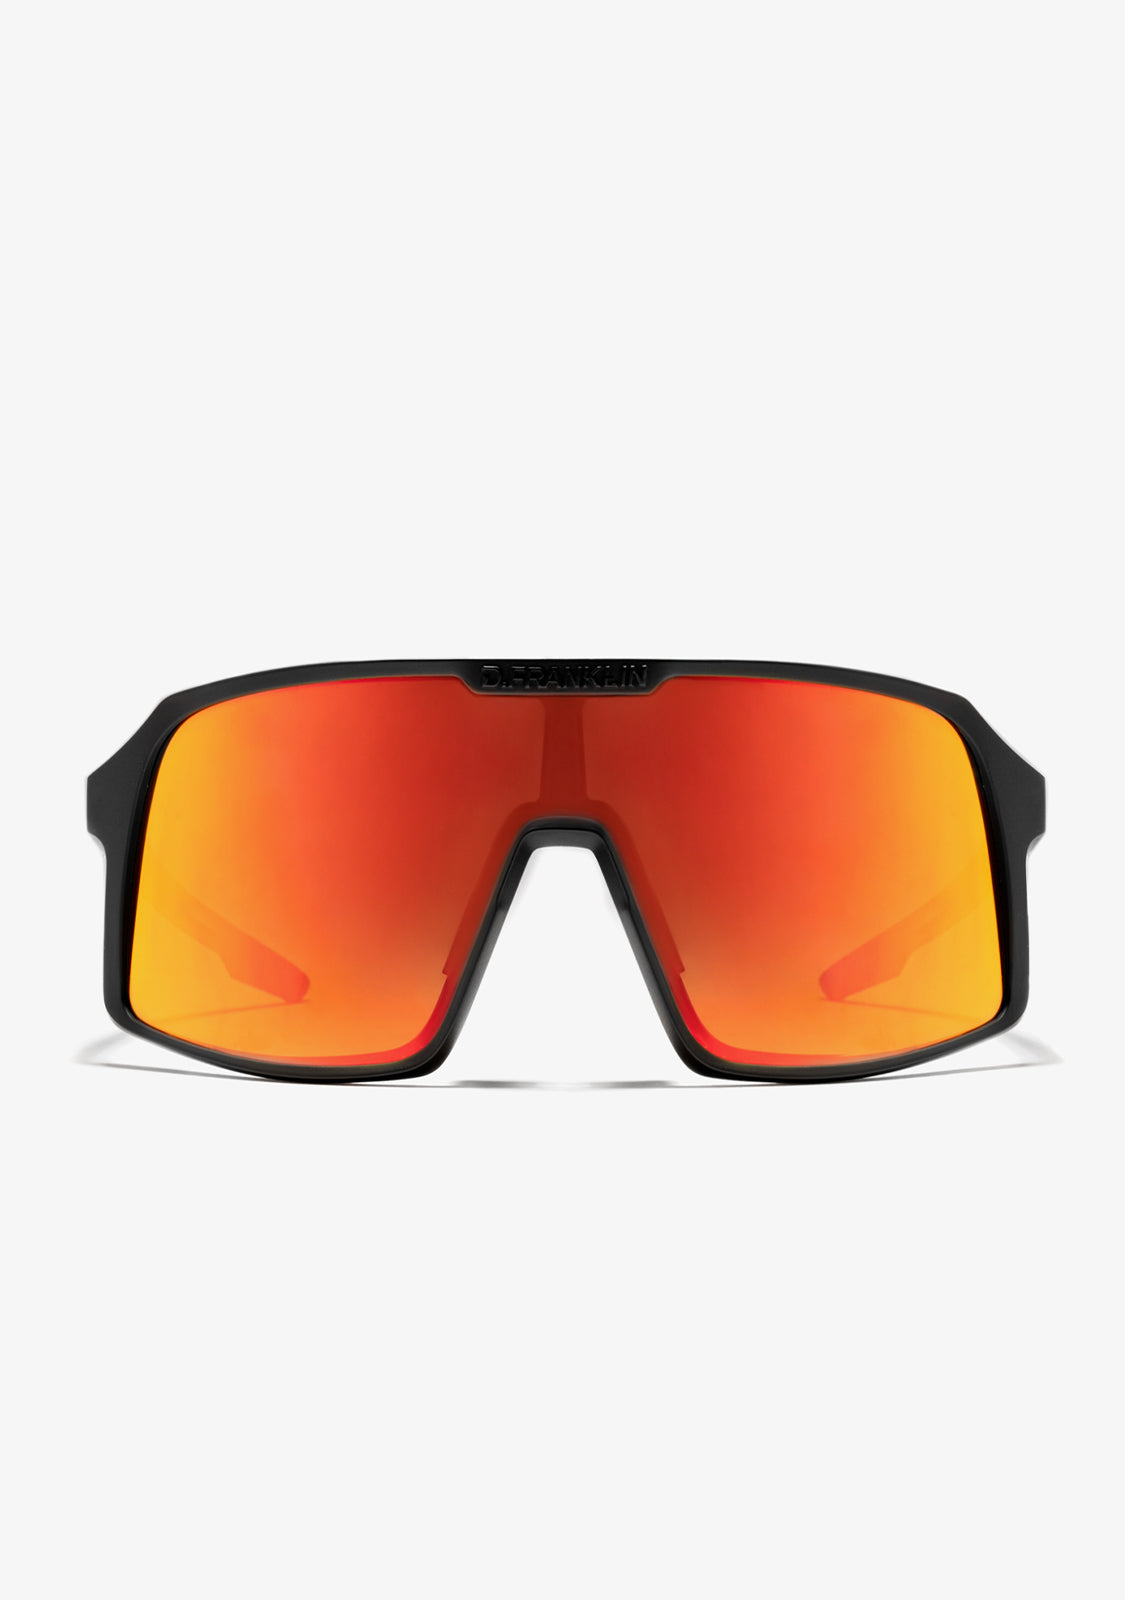 Wind Sports Sunglasses Black / Red